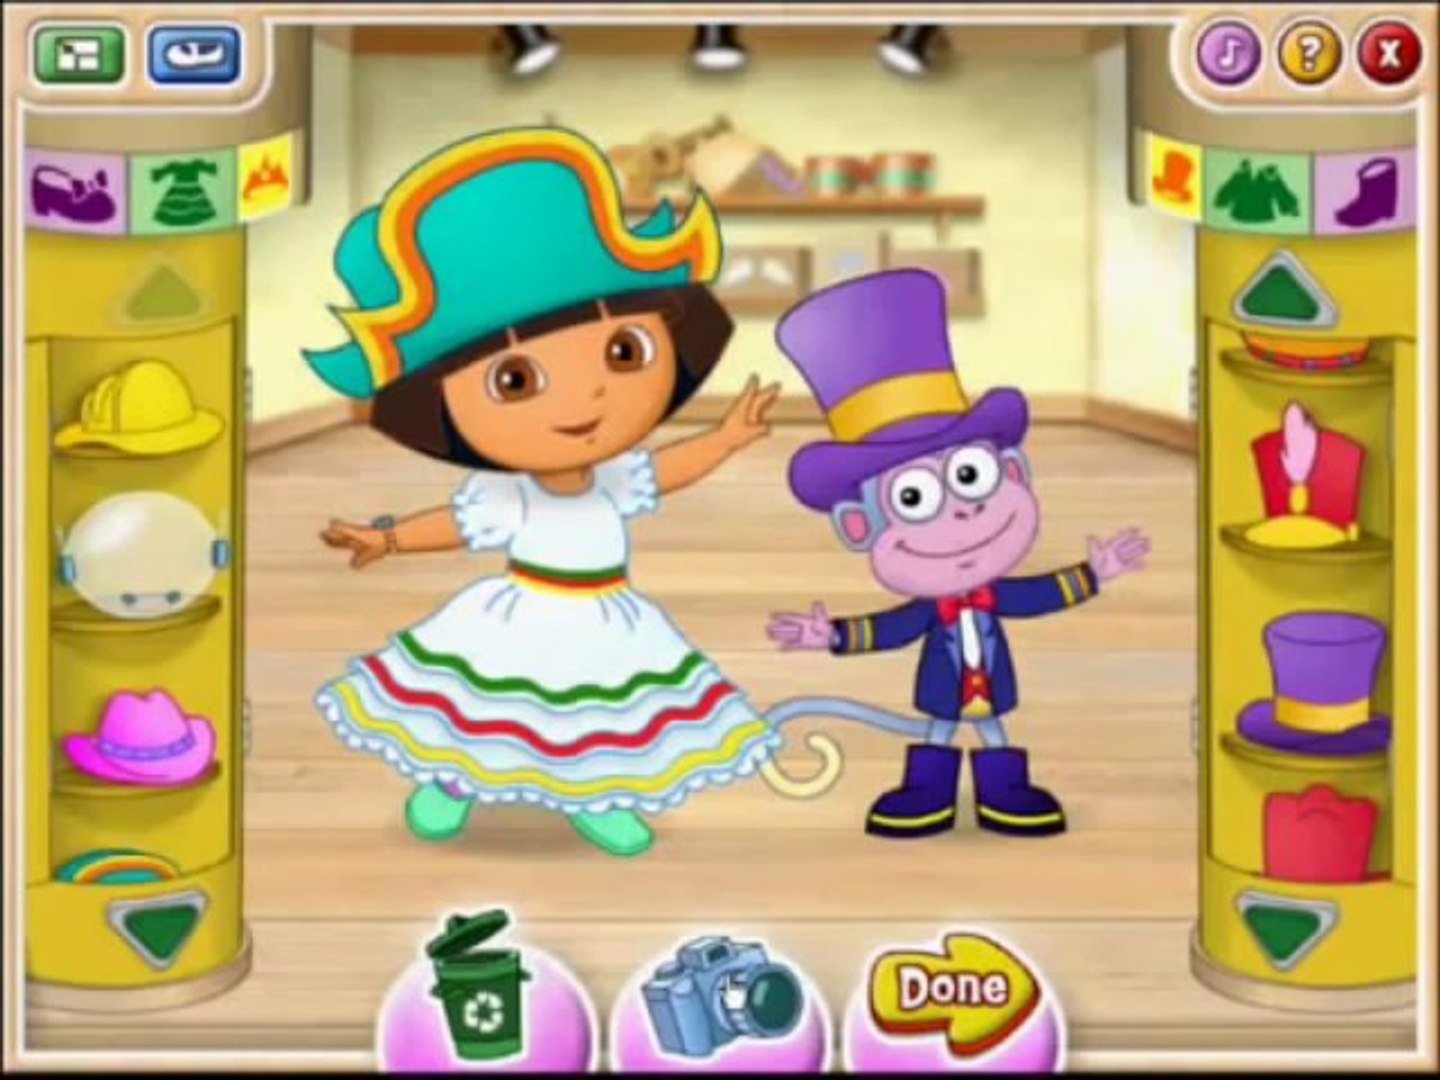 Dora The Explorer - Ballet Adventure - Full Game Episode - video Dailymotion